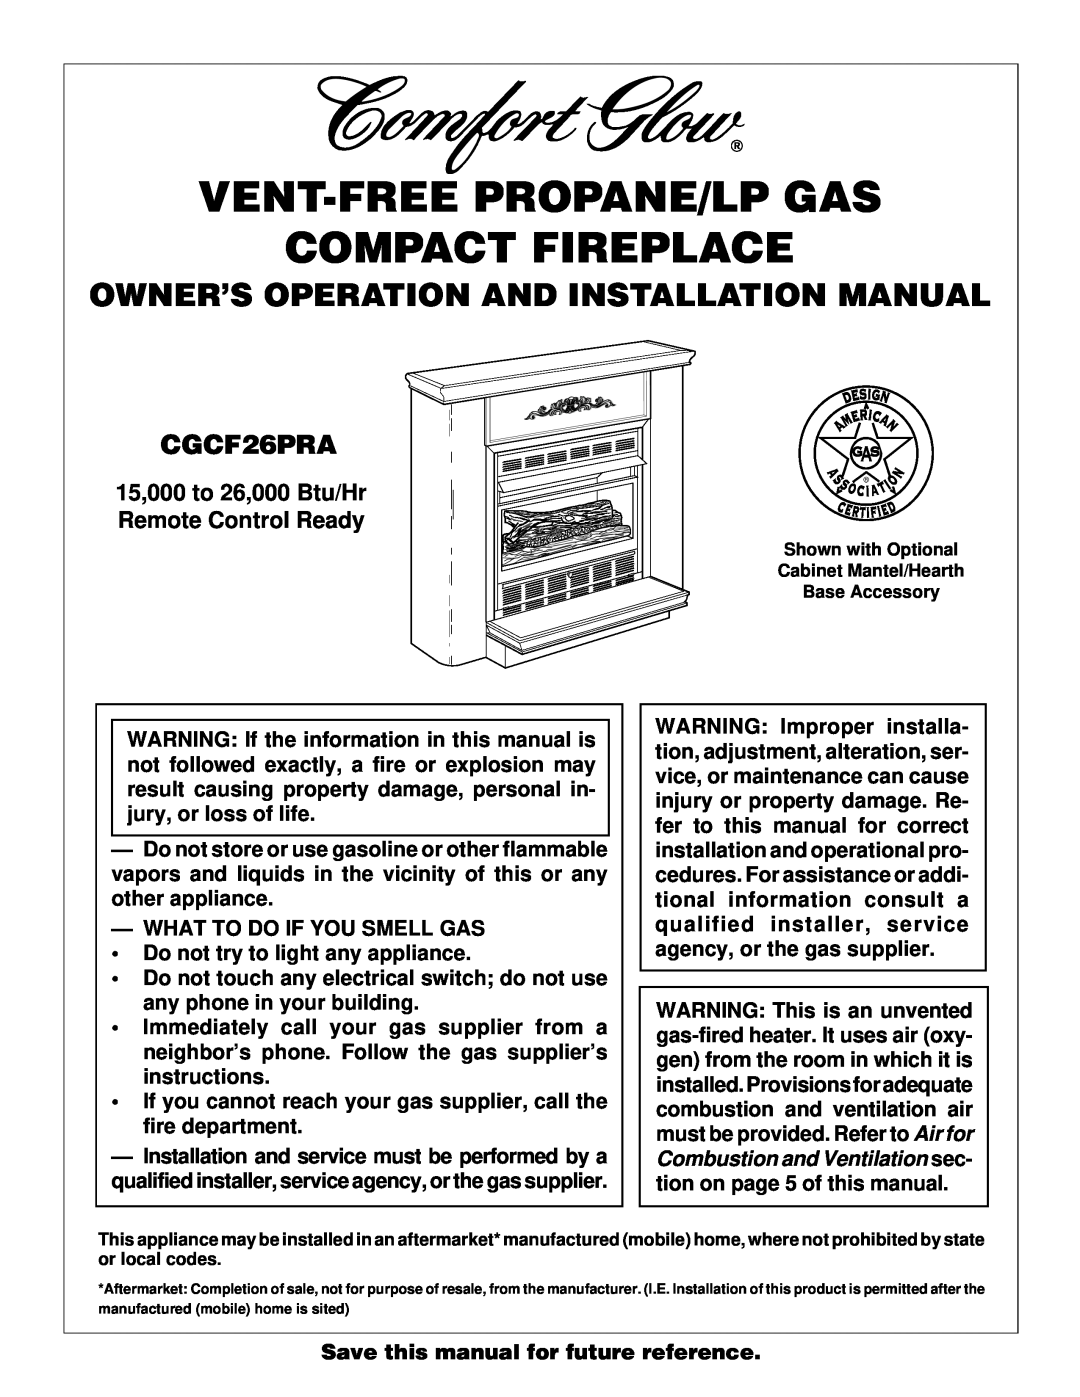 Desa CGCF26PRA installation manual Owner’S Operation And Installation Manual, Vent-Freepropane/Lp Gas Compact Fireplace 